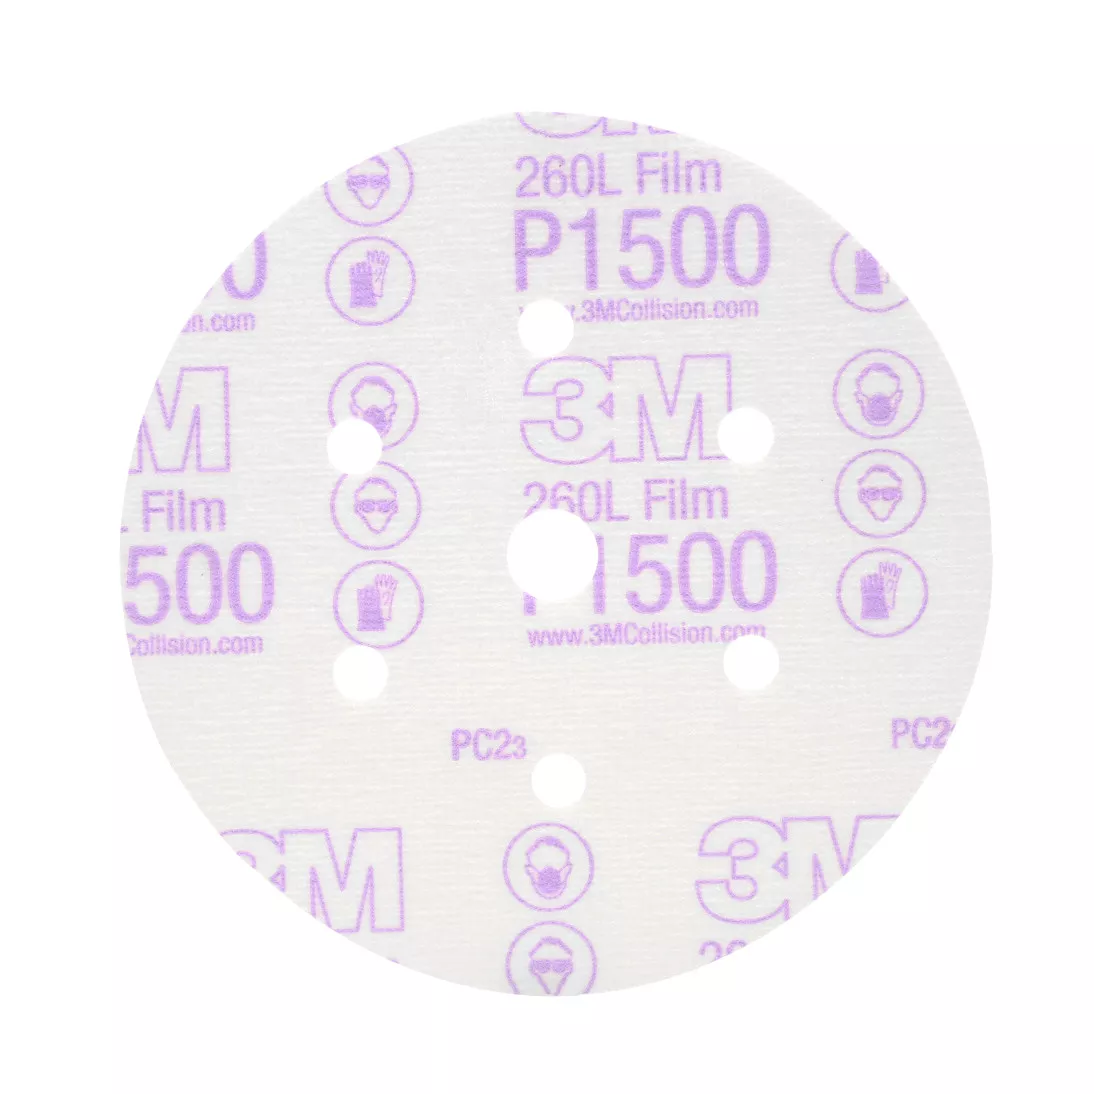 3M™ Hookit™ Finishing Film Abrasive Disc 260L, 01050, 6 in, Dust Free,
P1500, 100 discs per carton, 4 cartons per case